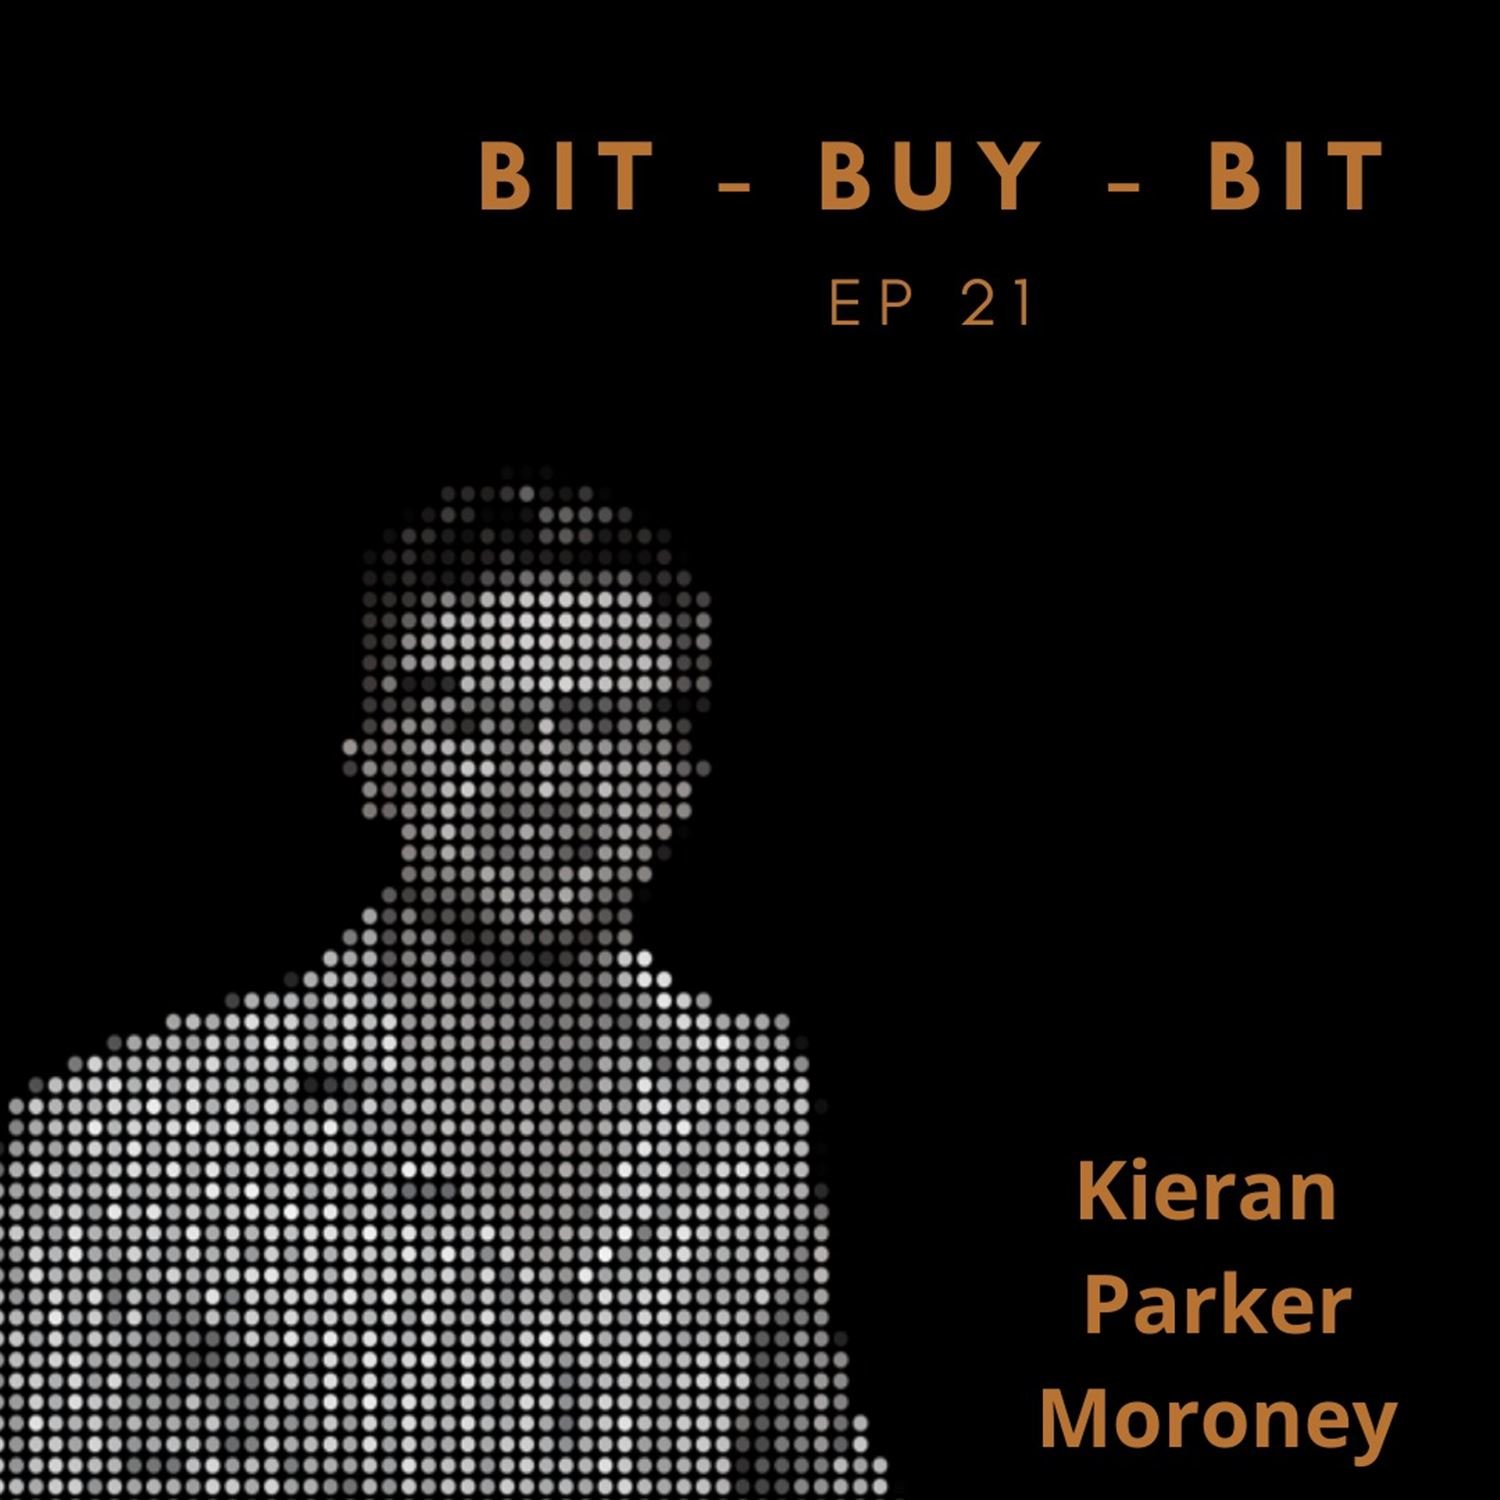 EP21 Bitcoin podcast with Kieran Parker Moroney. 